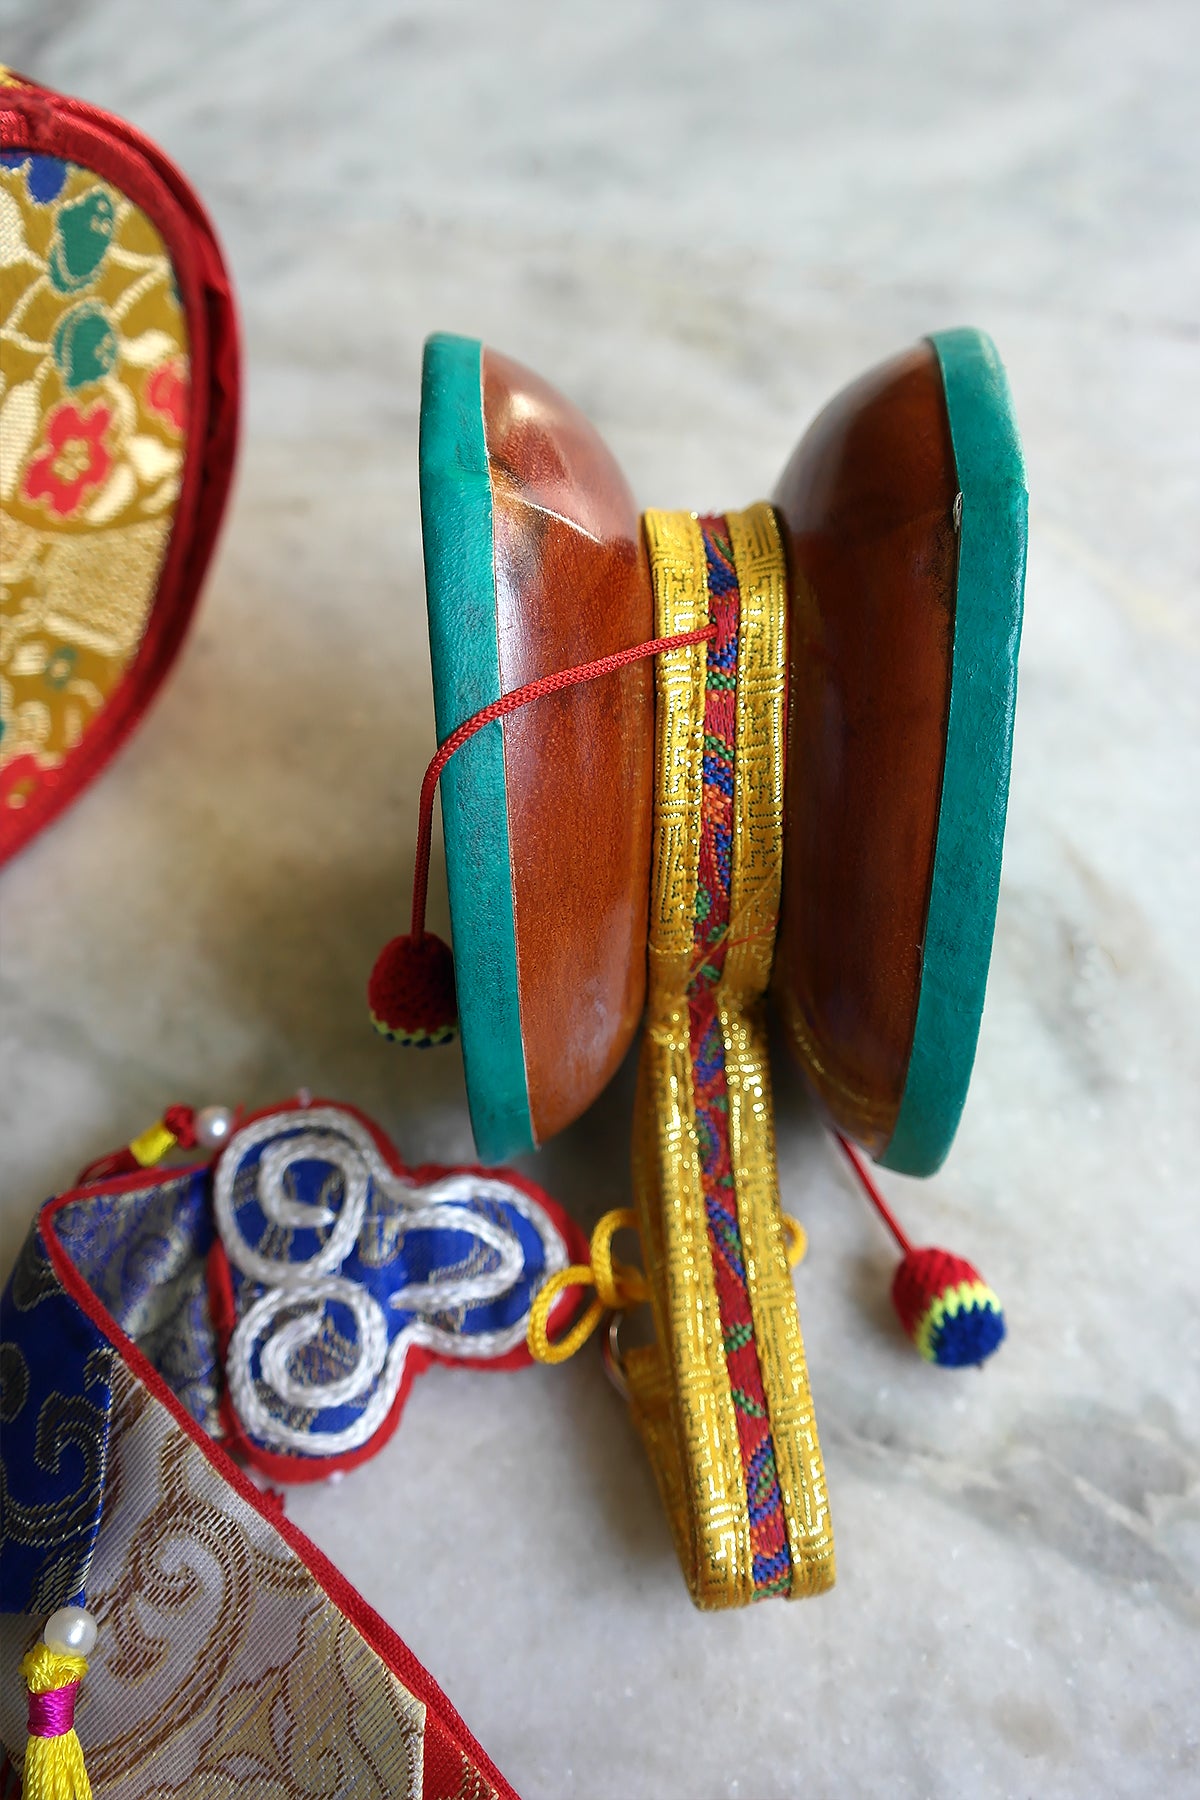 Exclusive Tibetan Buddhist Ritual Chod Drum Damaru from Boudhanath